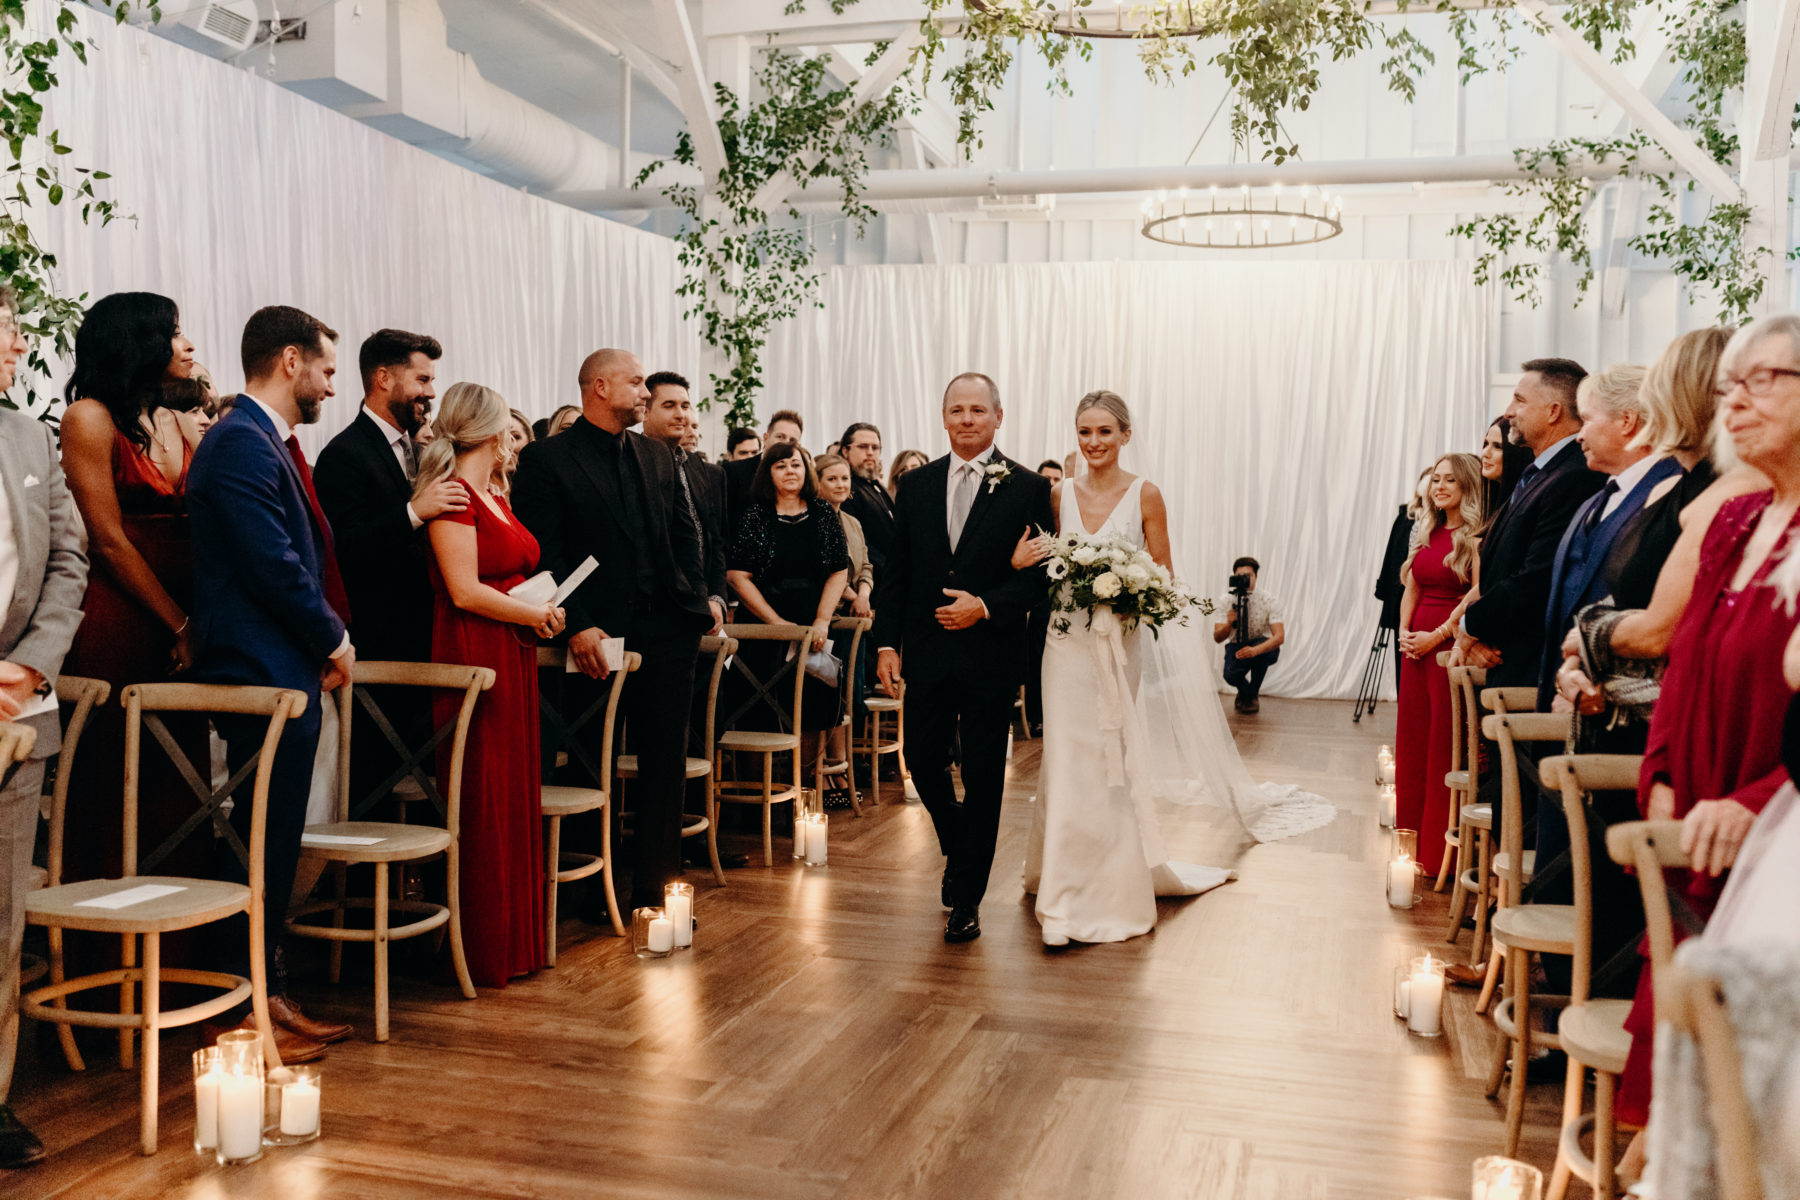 Lauren Bushnell and Chris Lane Nashville Wedding captured by Victoria Bonvinci